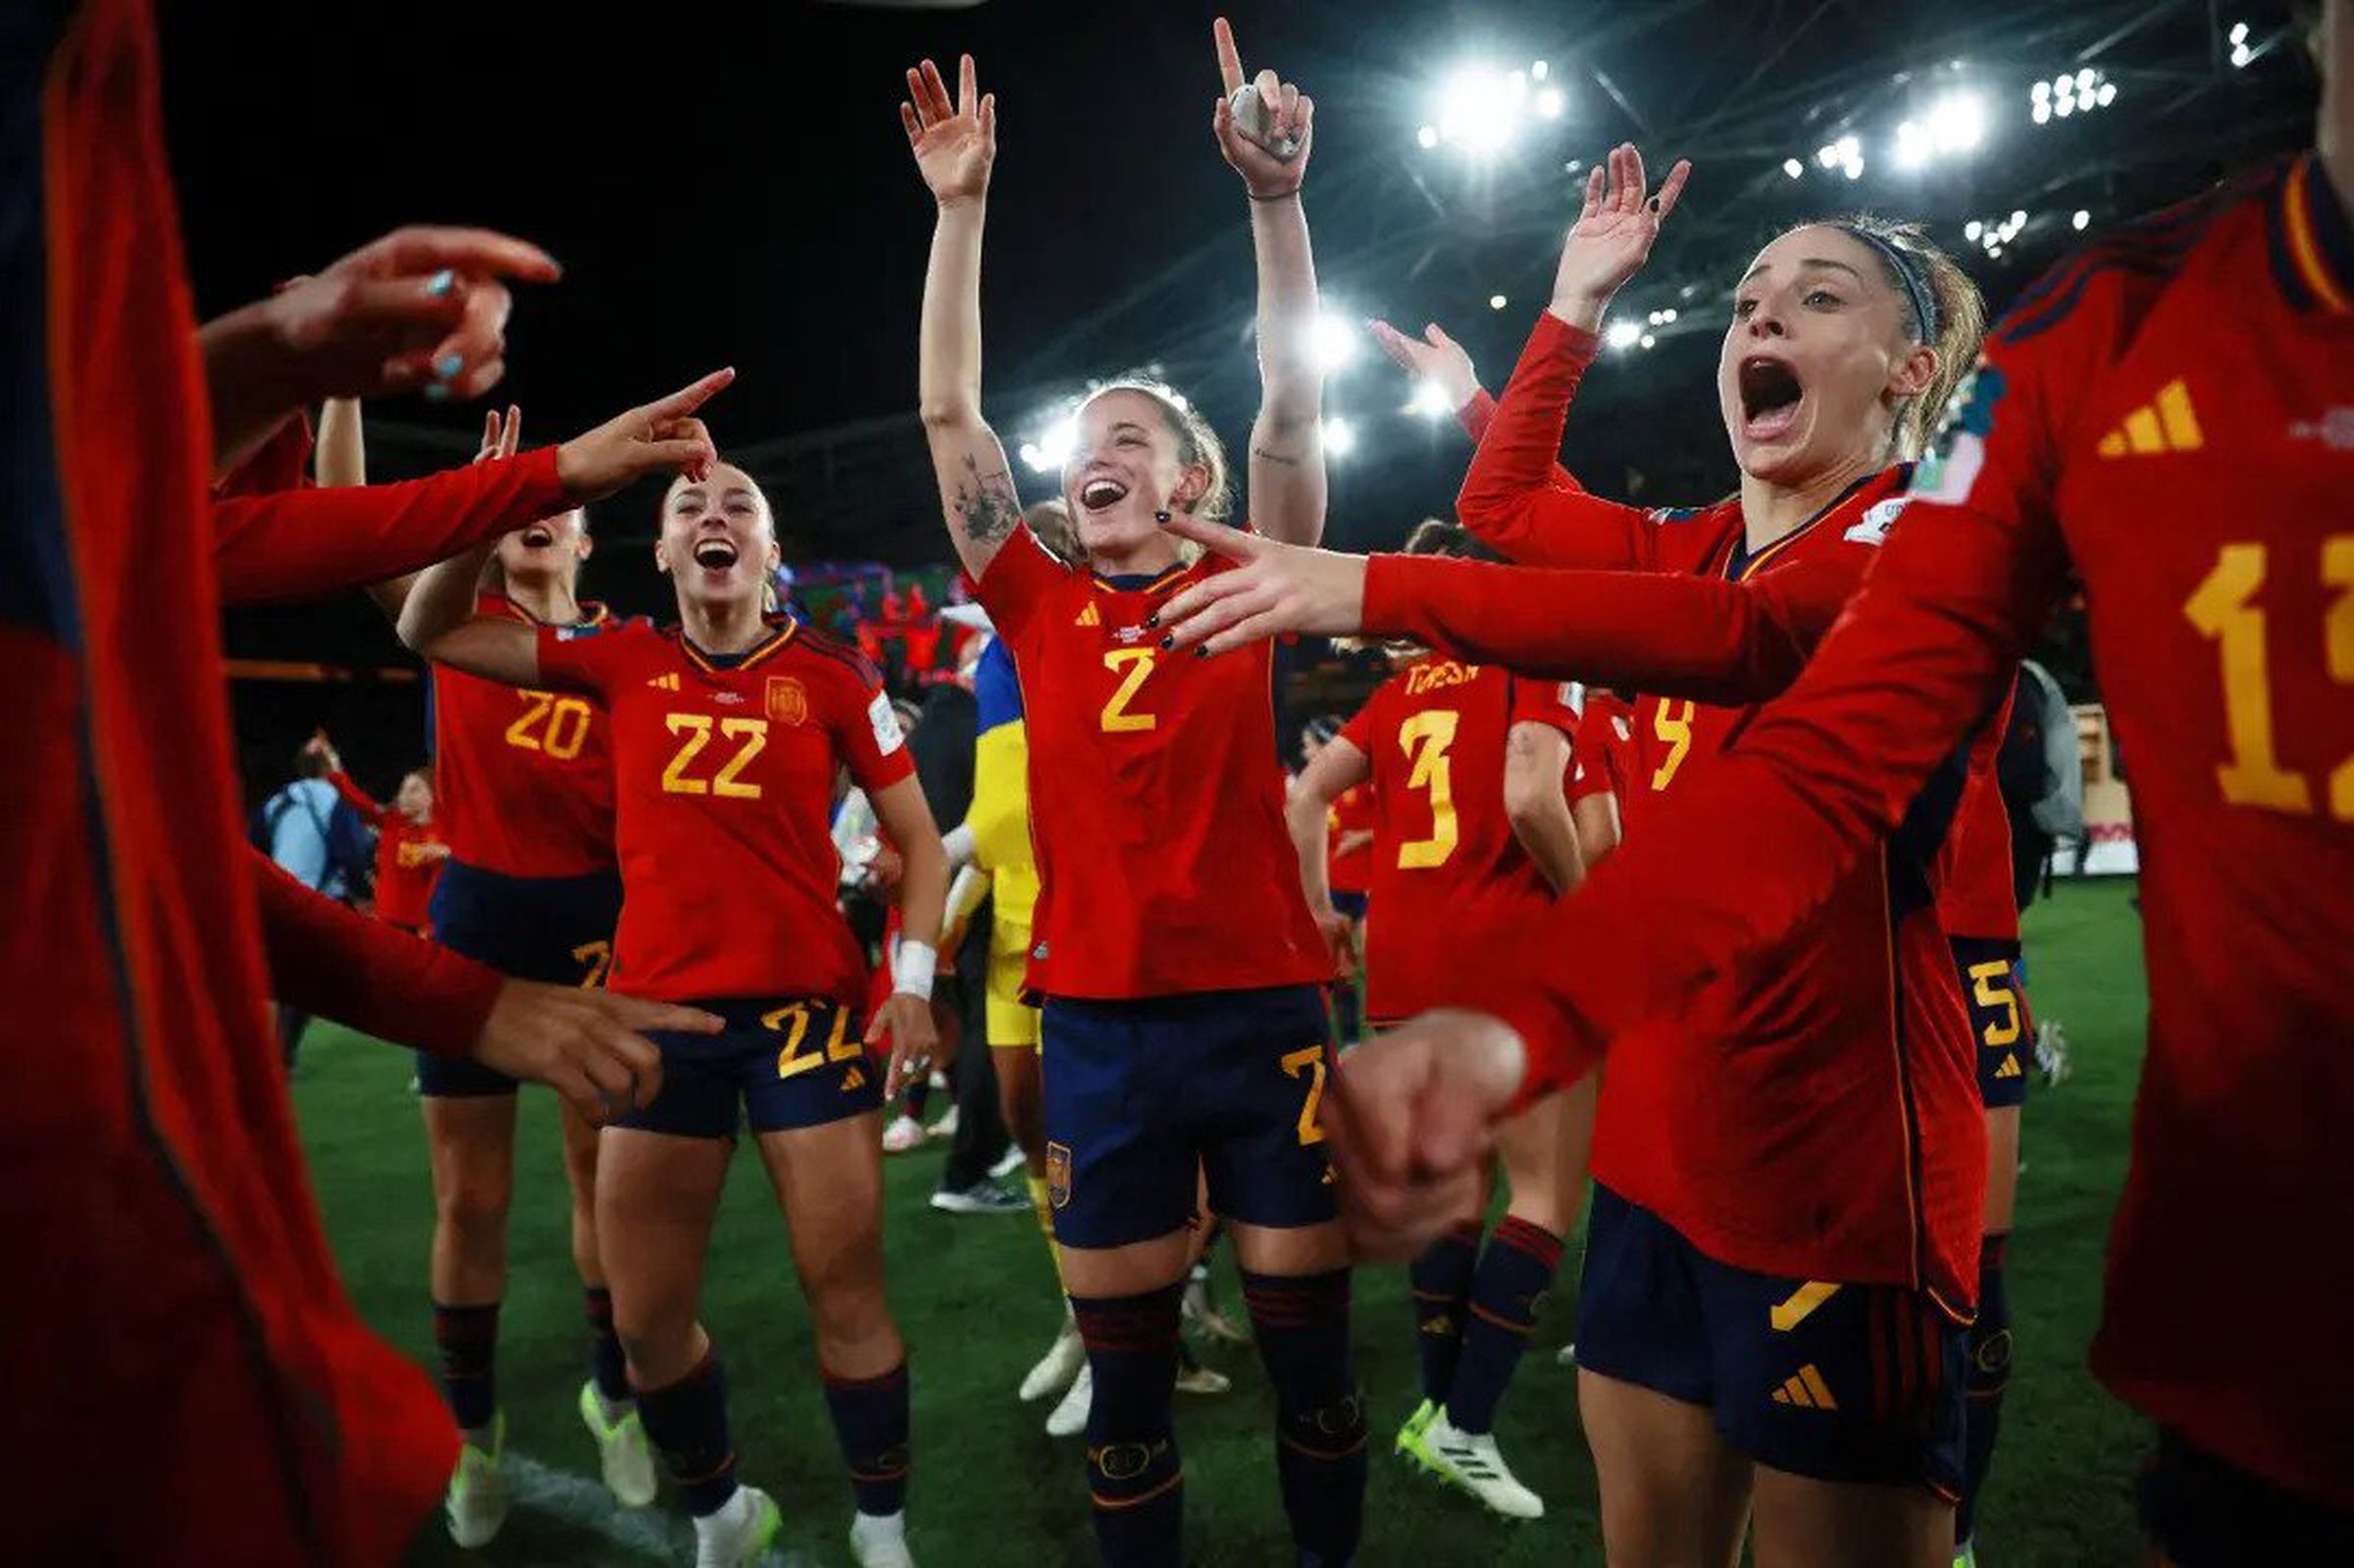 The Spanish women’s soccer team celebrating in a stadium.